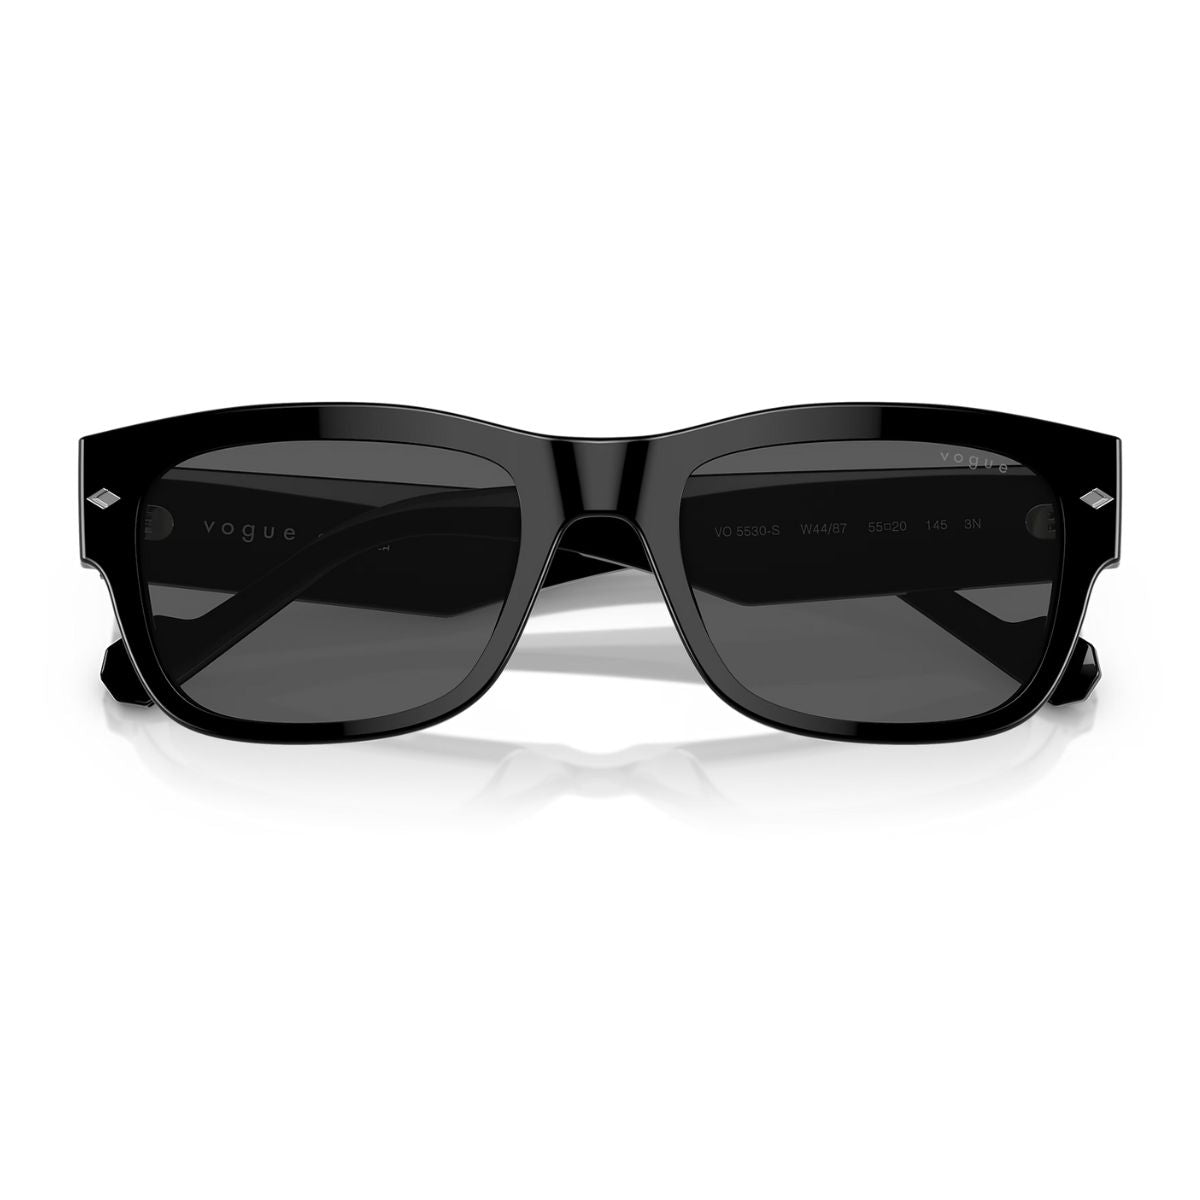 "Shop Stylish Black Color Square Sunglasses For Women's At Online | Optorium"